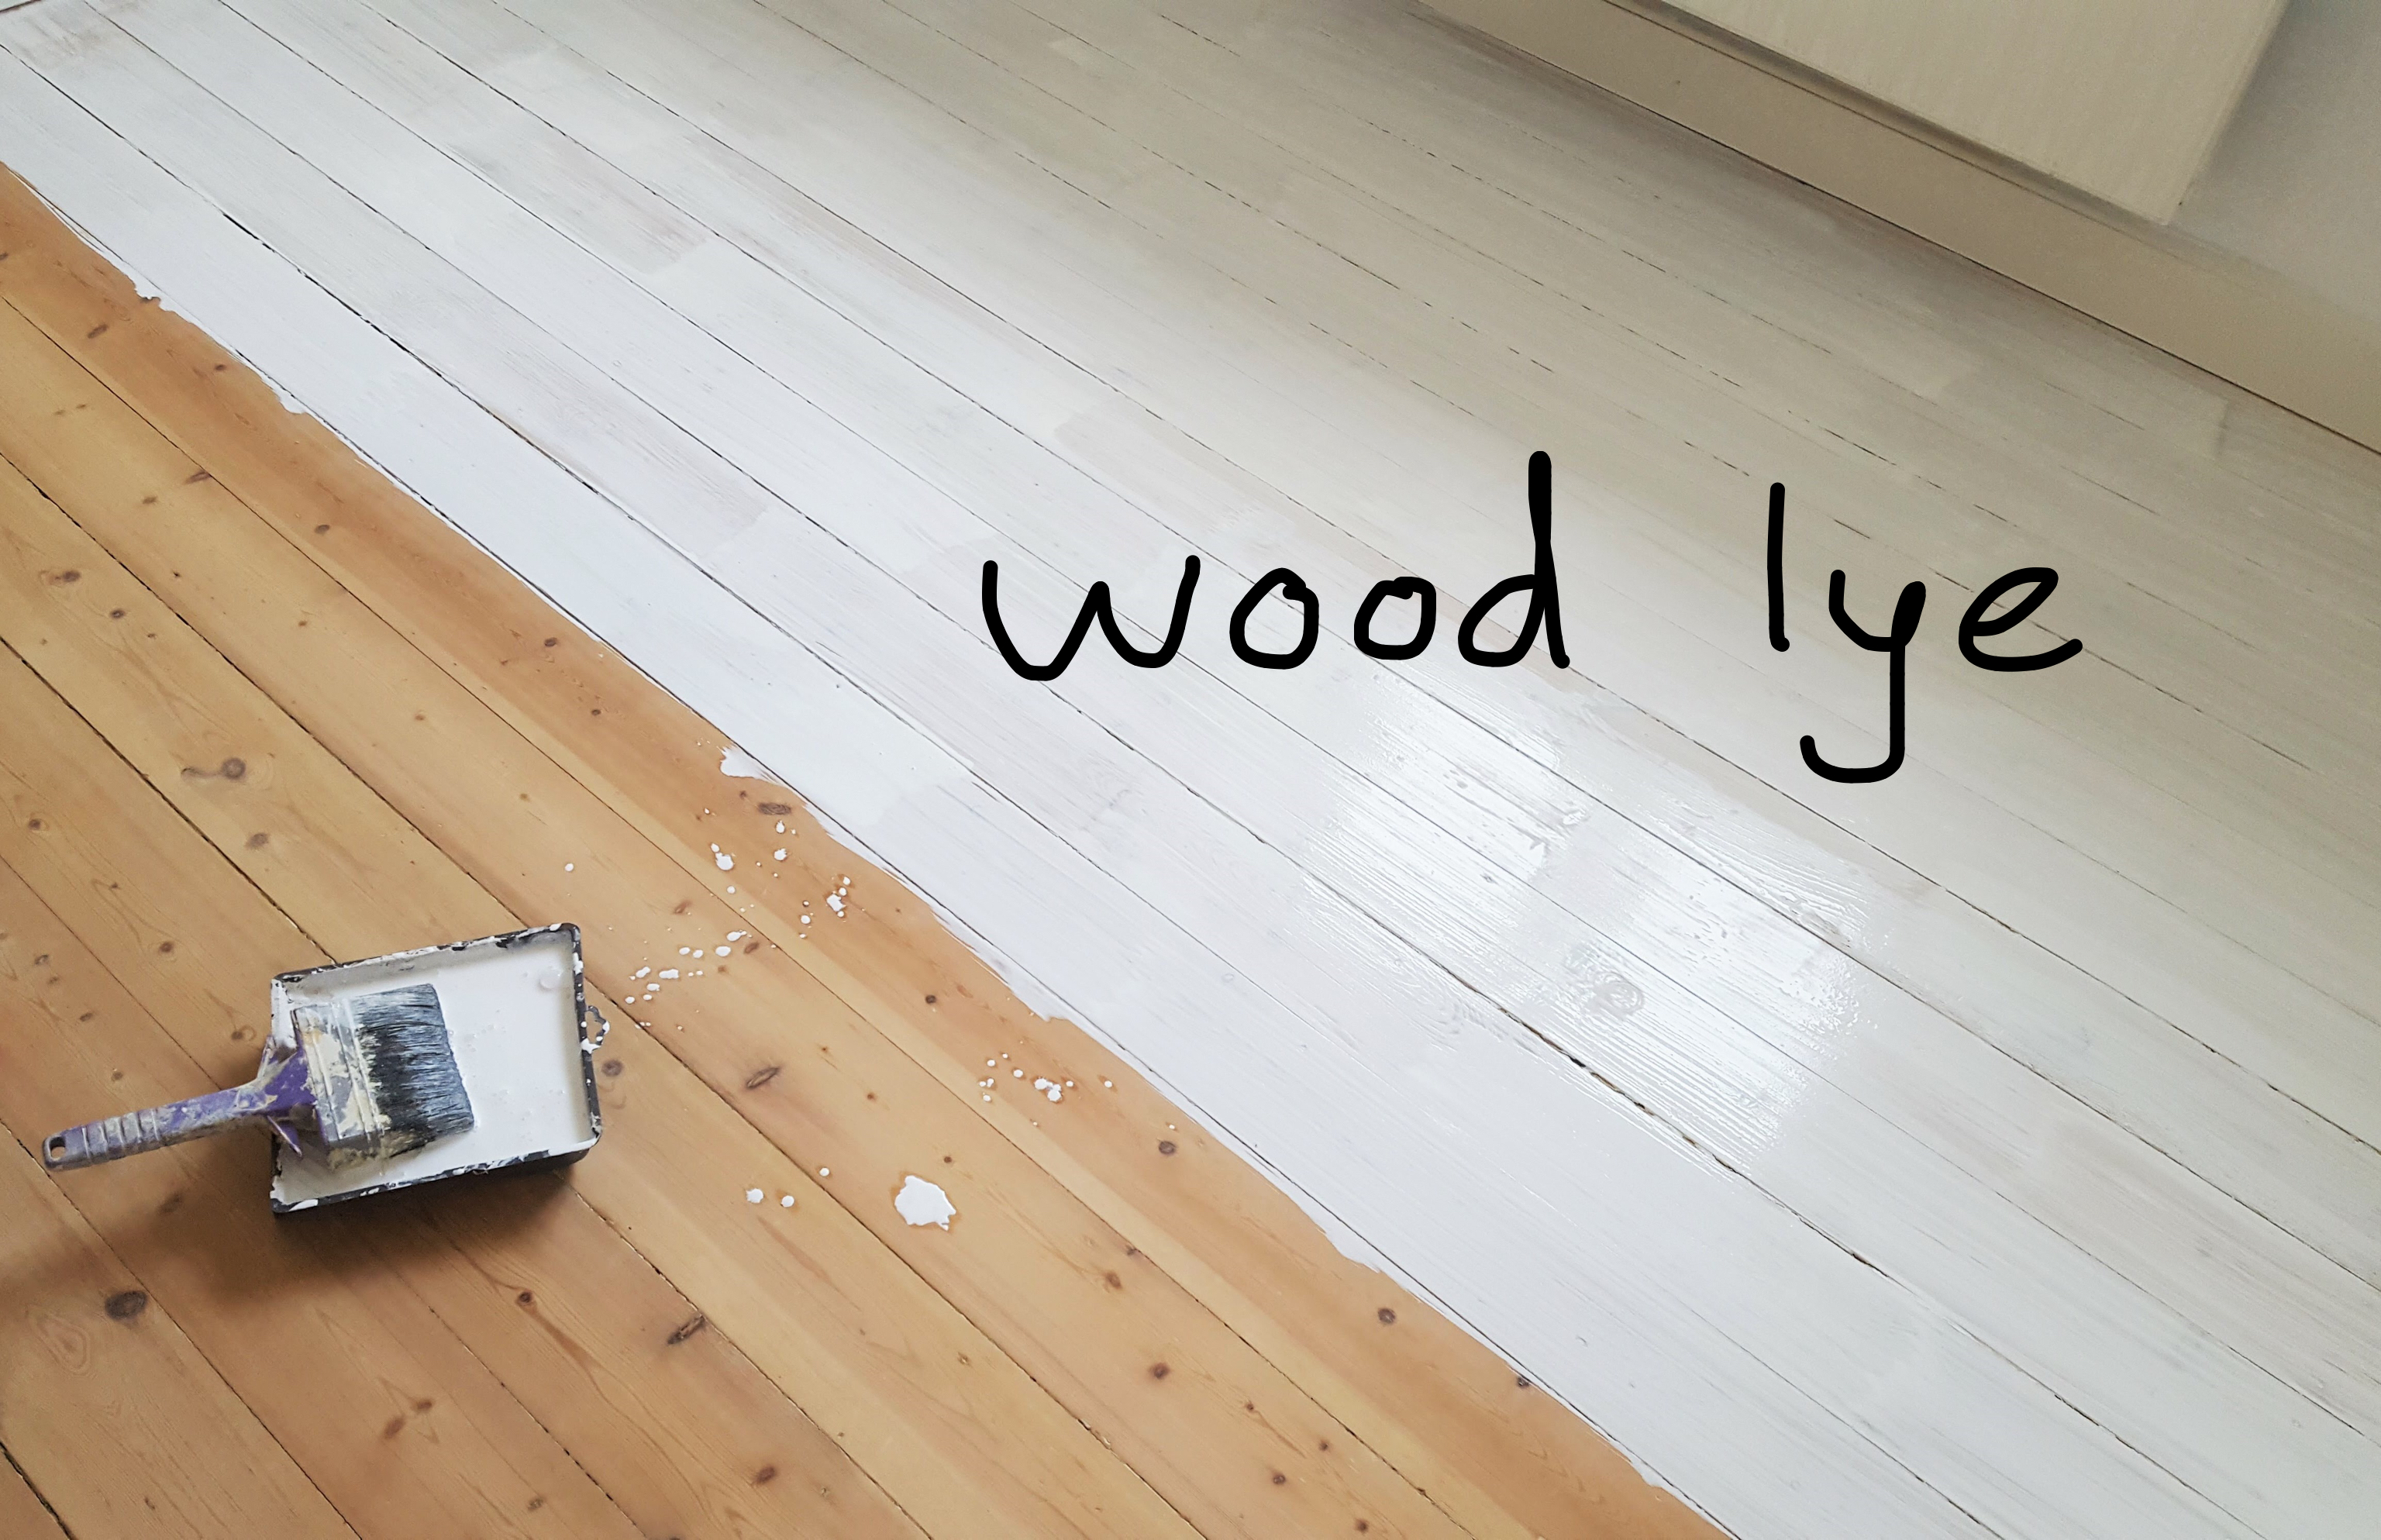 Guide Give Your Floor A Nordic Look, Danish Oil Hardwood Floors